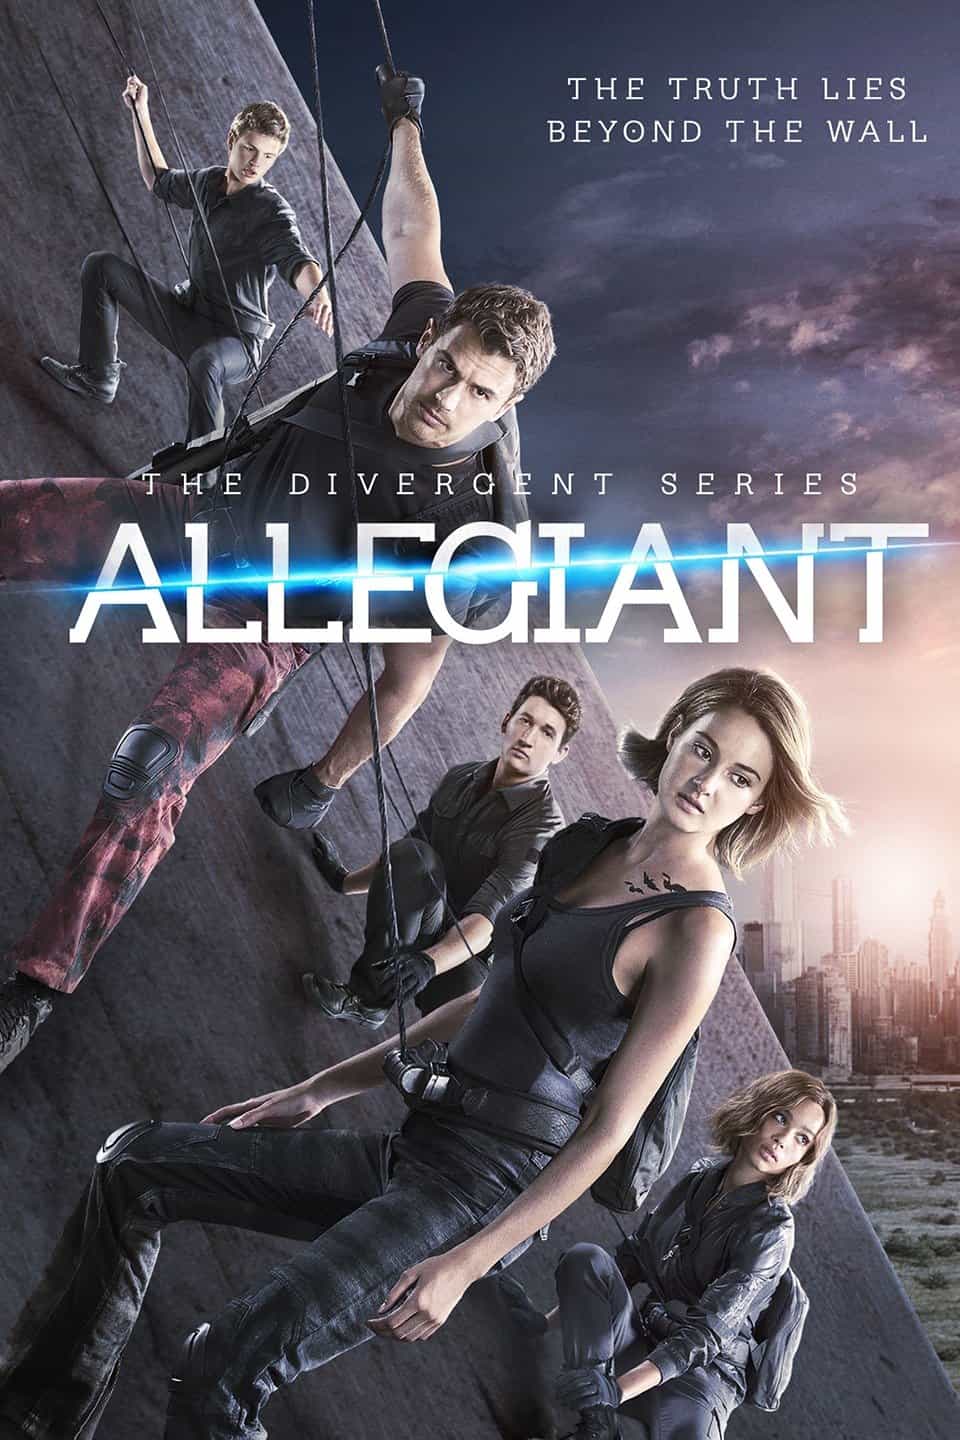 First trailer for the third Divergent Series film Allegiant